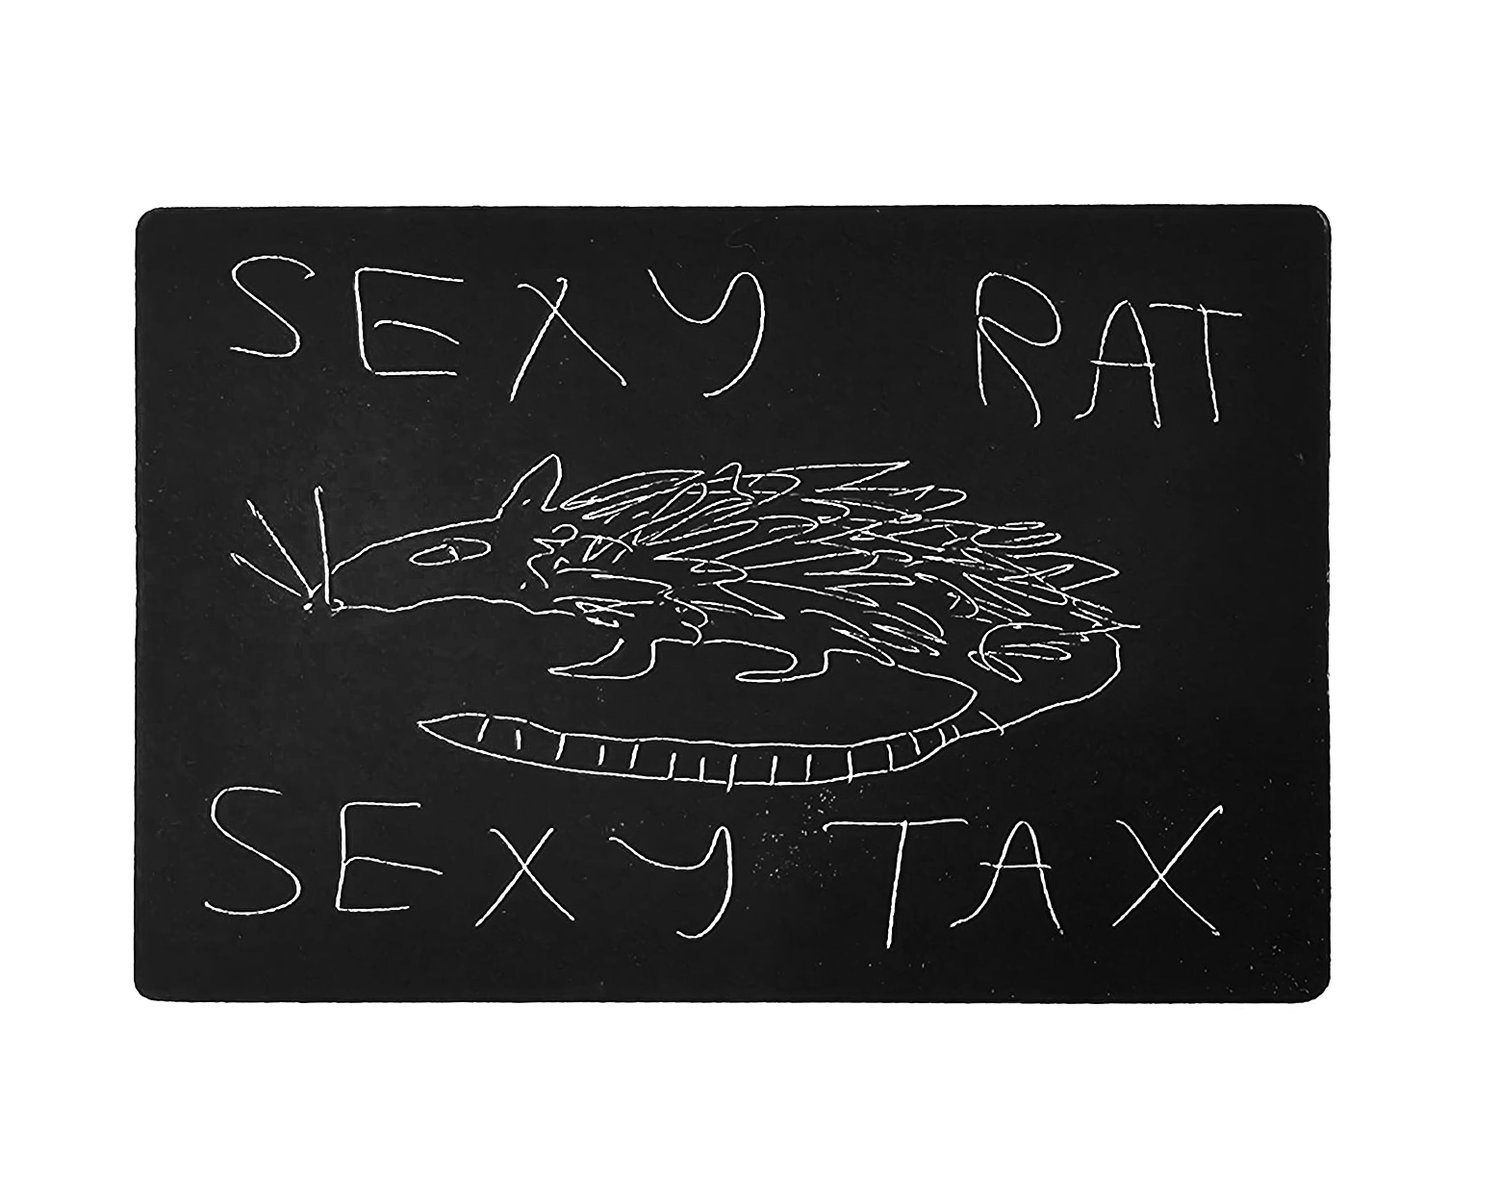 “Sewer tax”